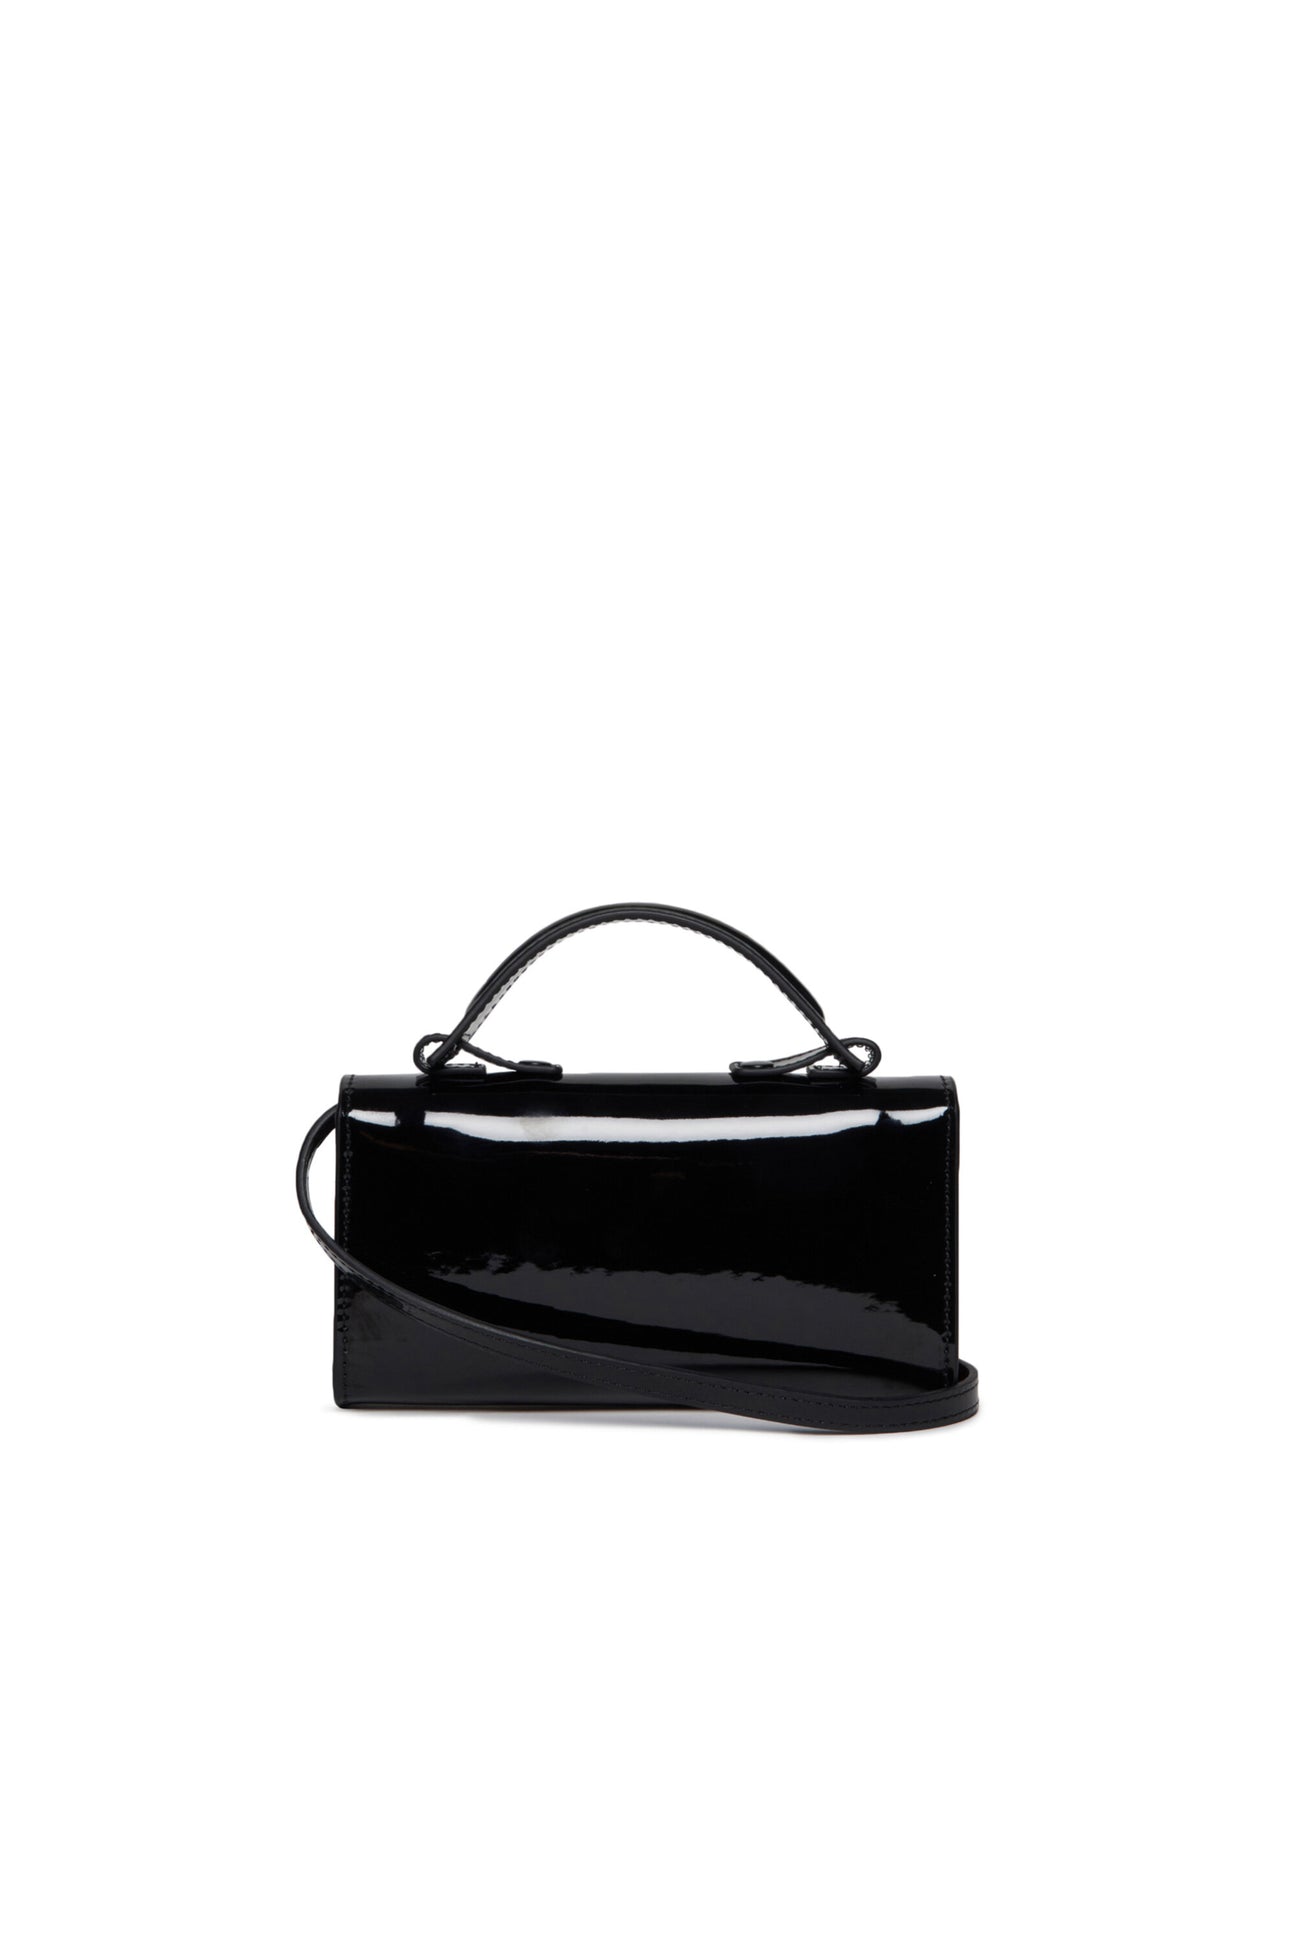 Black mini bag in leatherette with varnished effect and handle Black mini bag in leatherette with varnished effect and handle